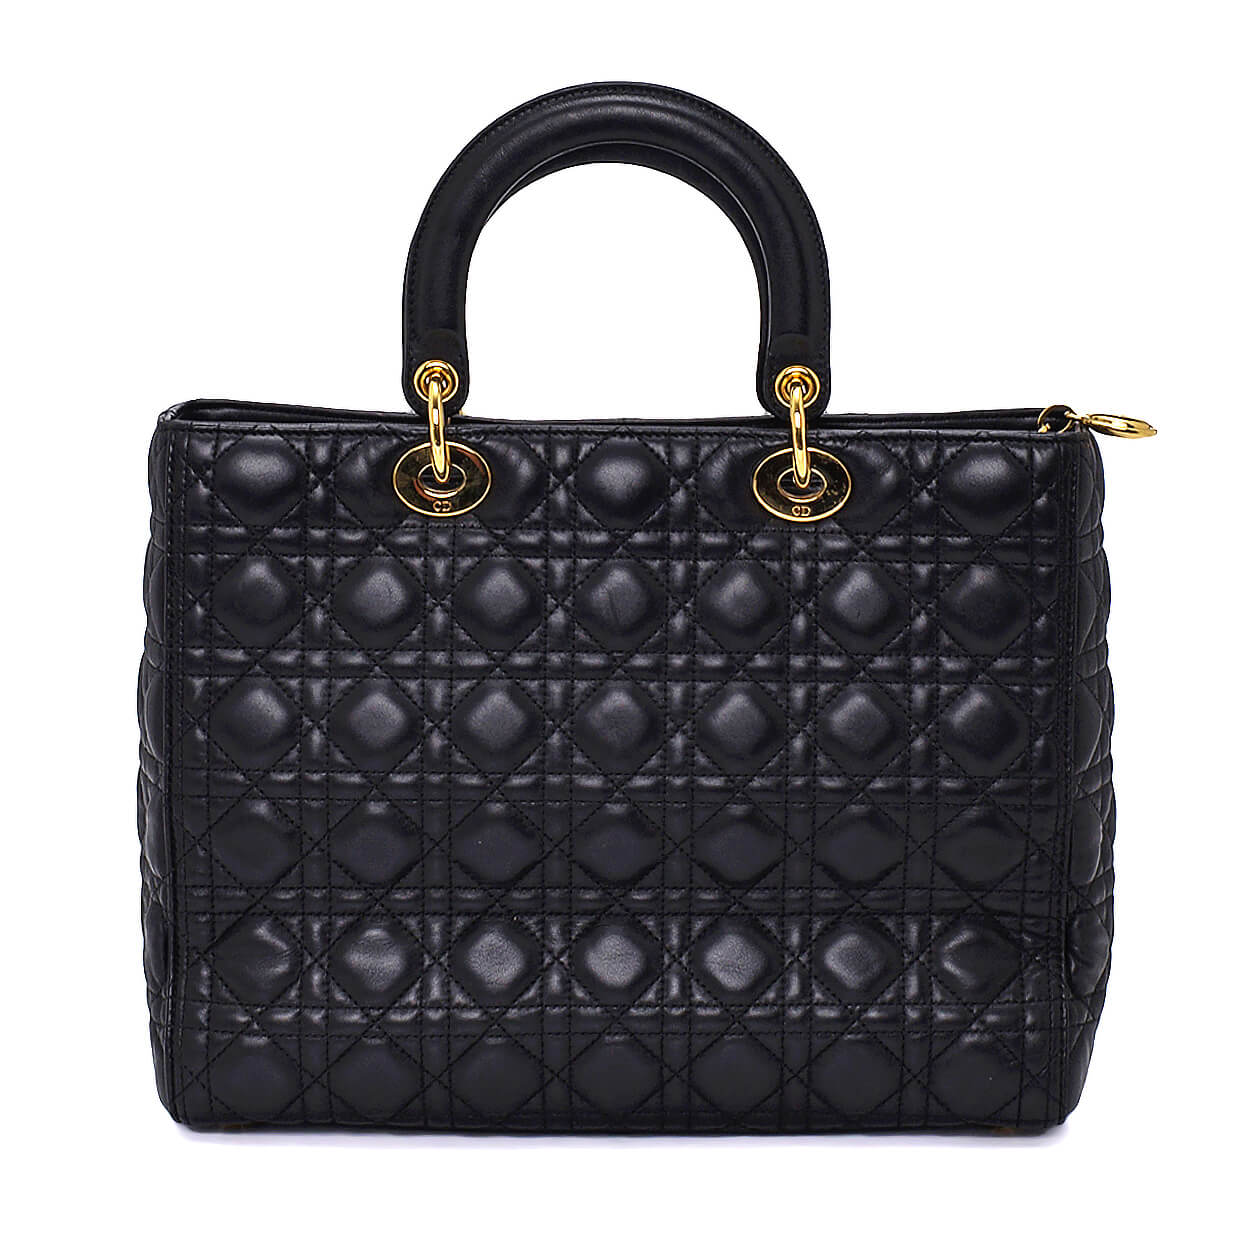 Christian Dior - Black Cannage Leather Large Lady Dior Bag